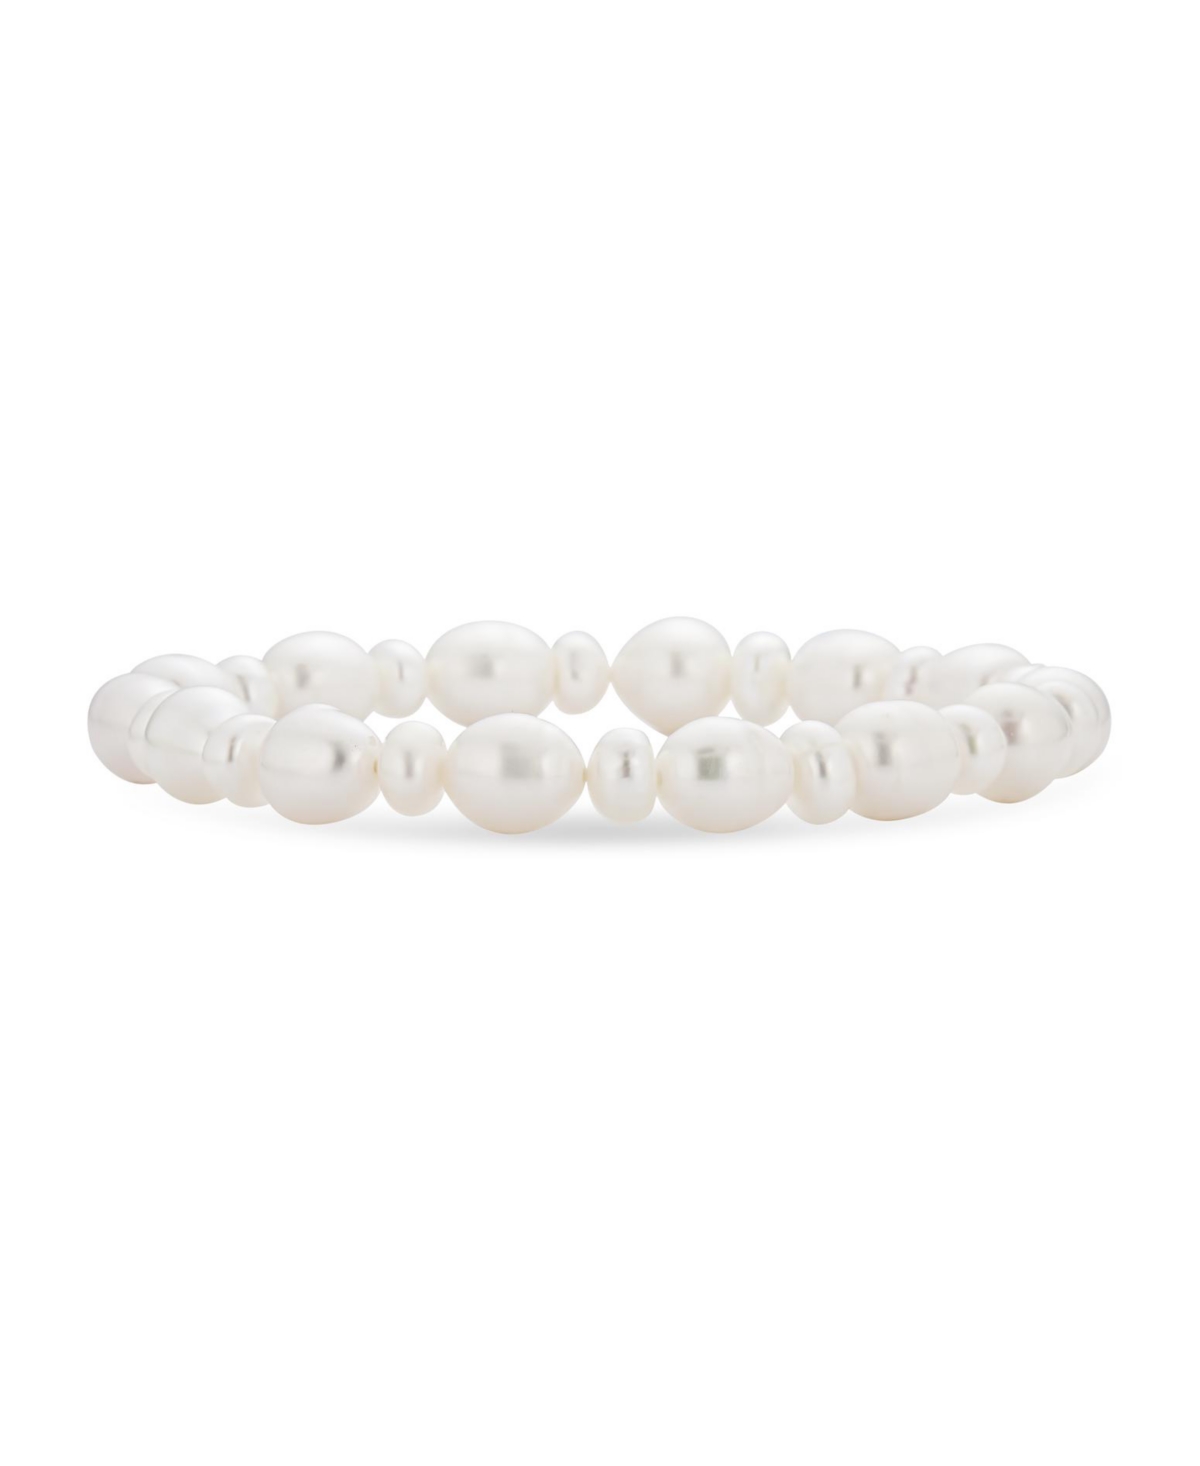 Genuine Stackable Baroque Irregular Shape White Freshwater Cultured Pearl Strand Stretch Bracelet For Women For Teen Adjustable - White